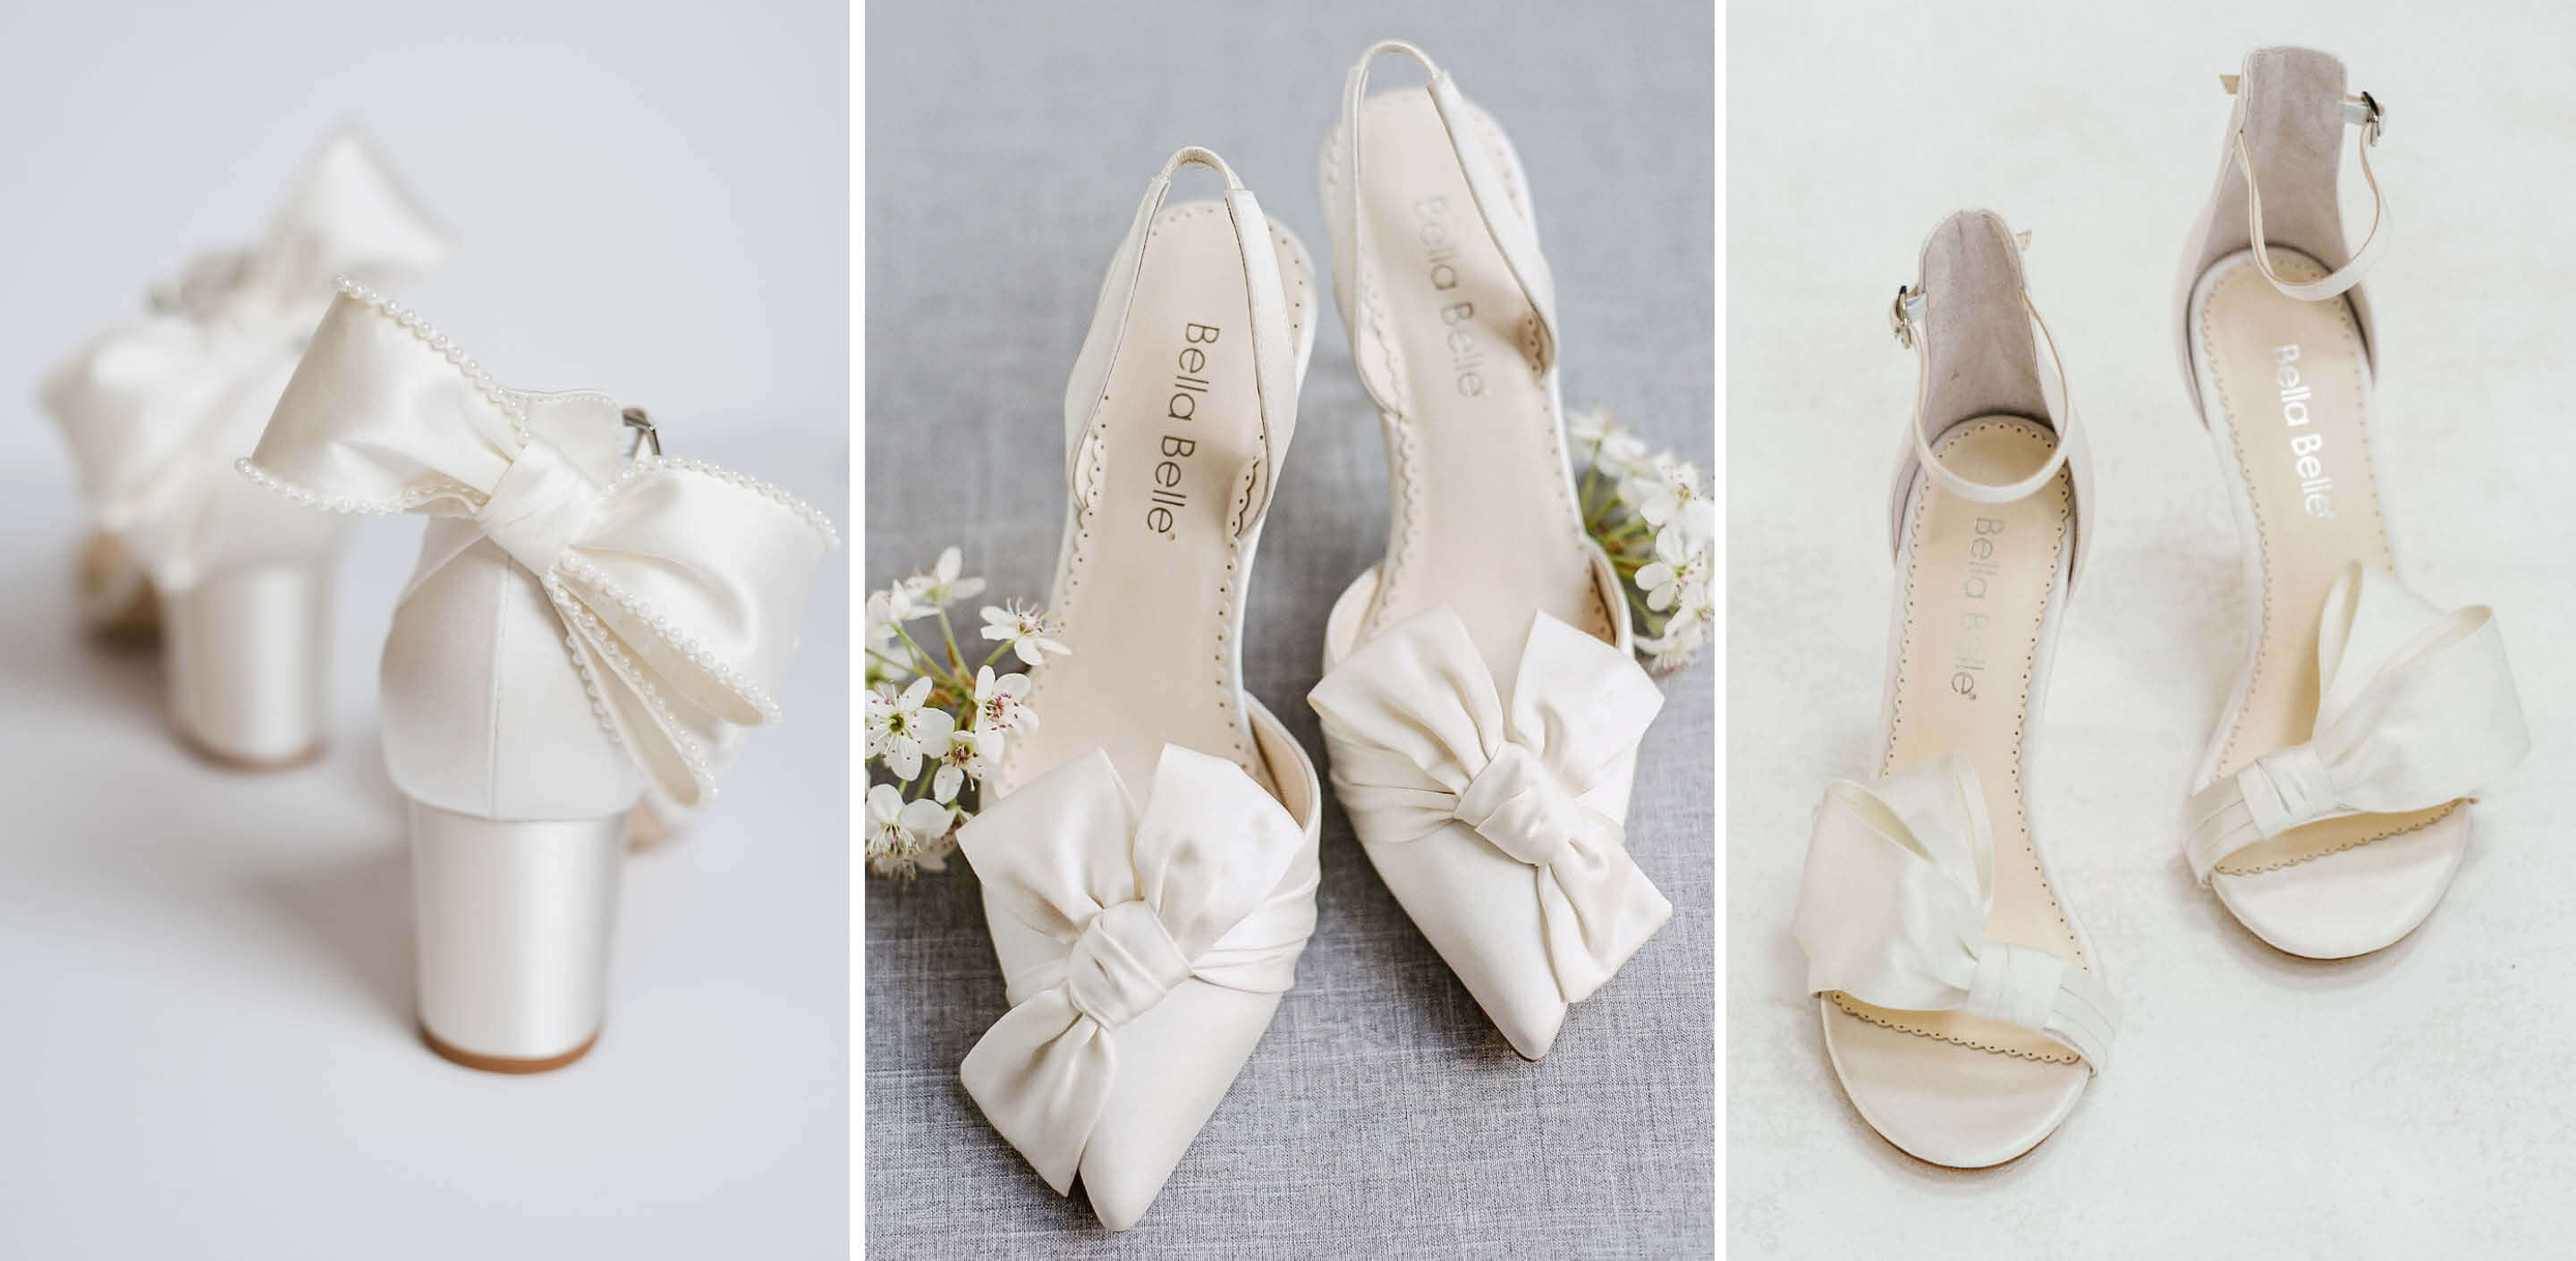 Mrs White 453-4A Women's Wedding Shoes 2.36 inches Cone Heel Lace Satin  Diamante Floral Prom Bridal Shoes Colour Ivory,Size 2.5 UK/35 EU :  Amazon.co.uk: Fashion